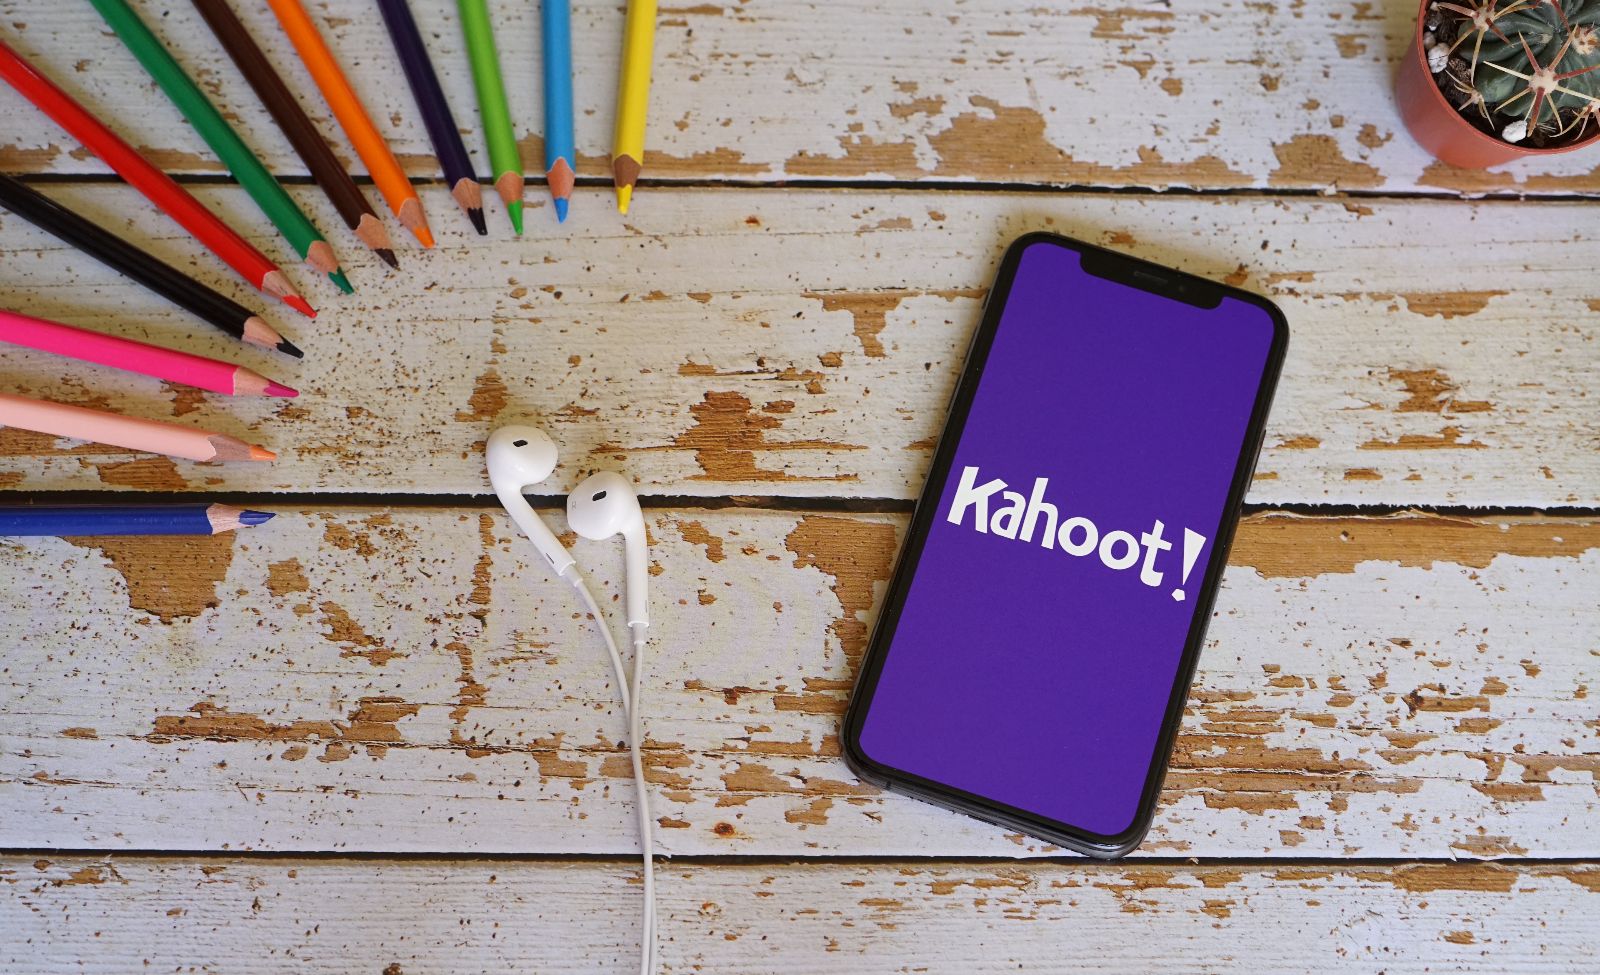 Kahoot quiz app on a smartphone